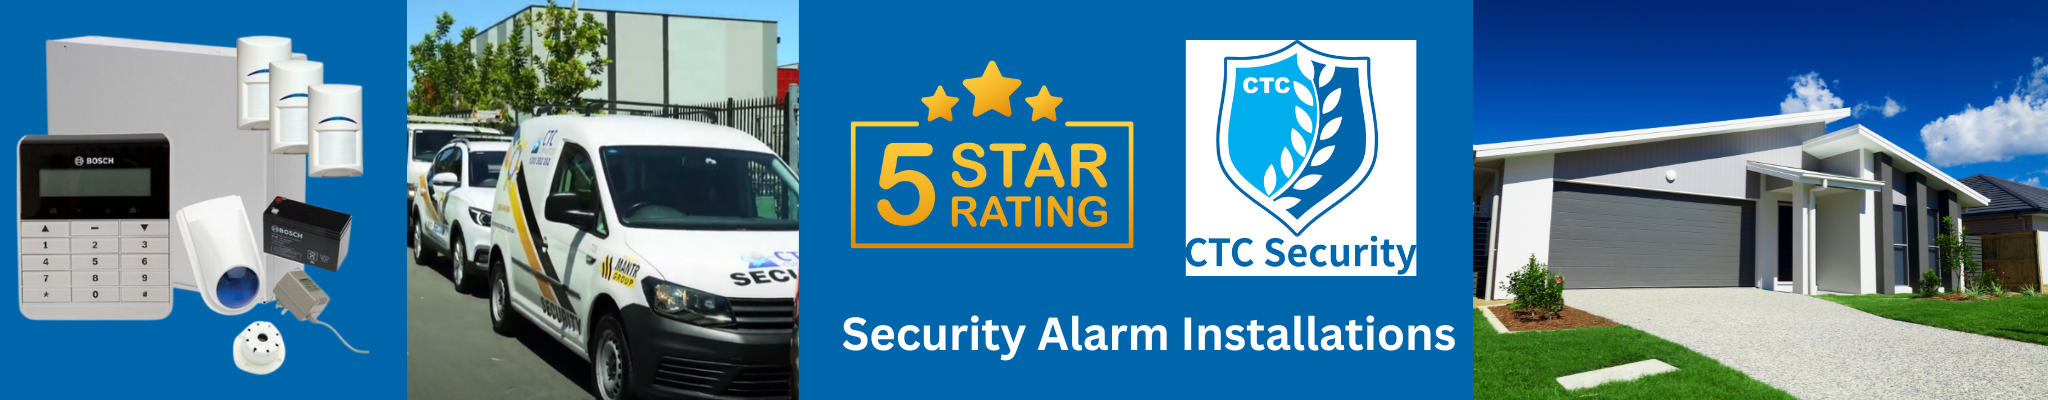 Security Alarm Installations-CTC Security